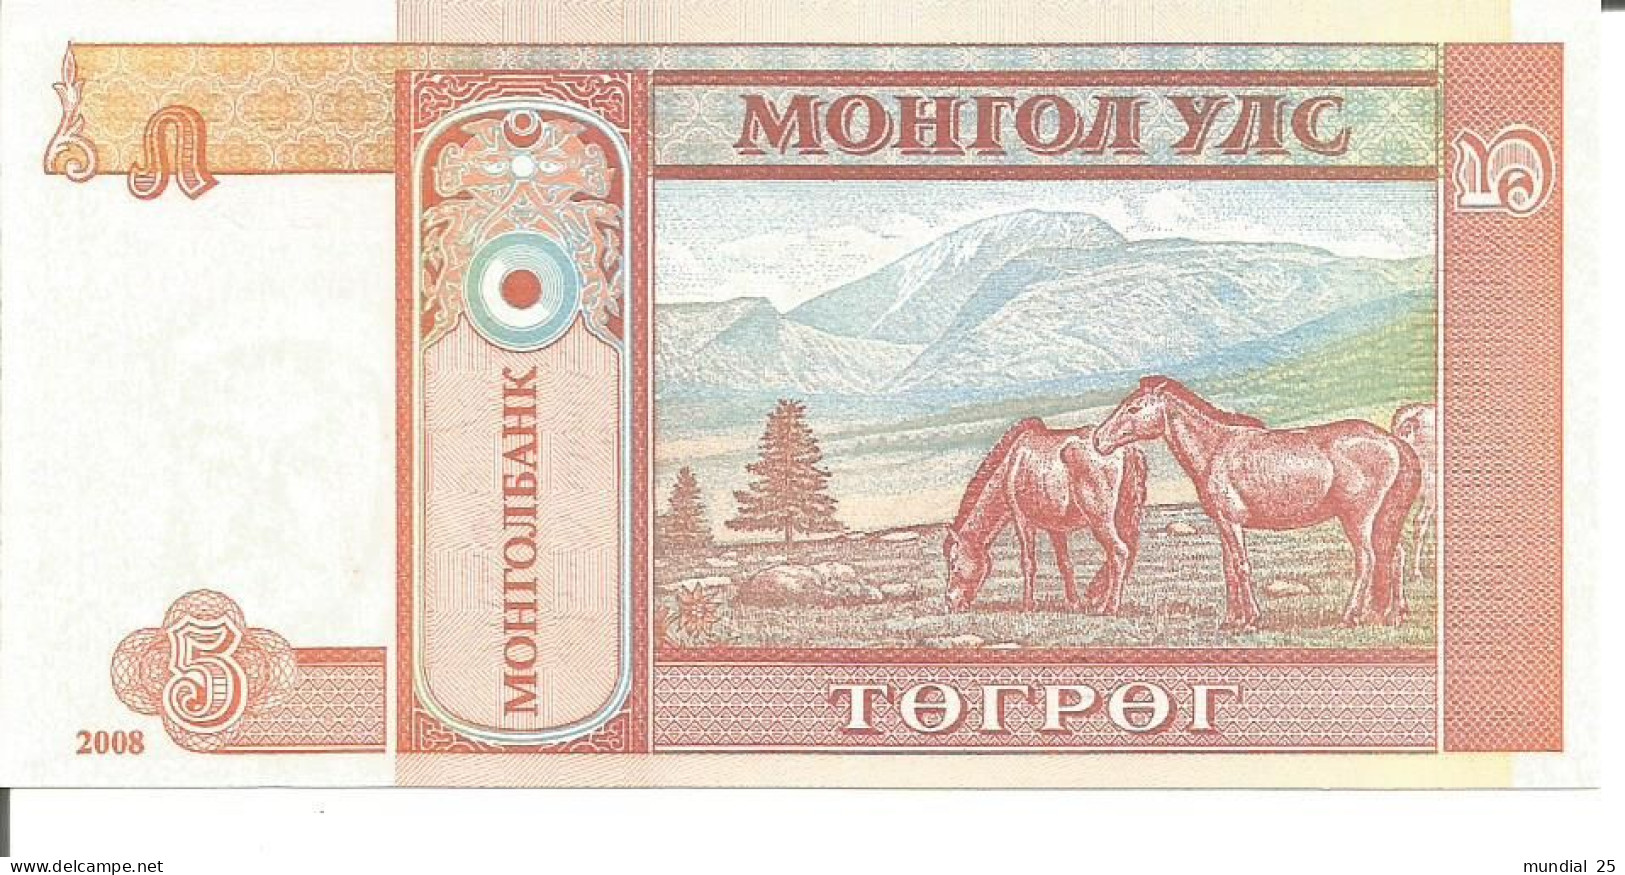 3 MONGOLIA NOTES 5 TUGRIK 2008 - Mongolei